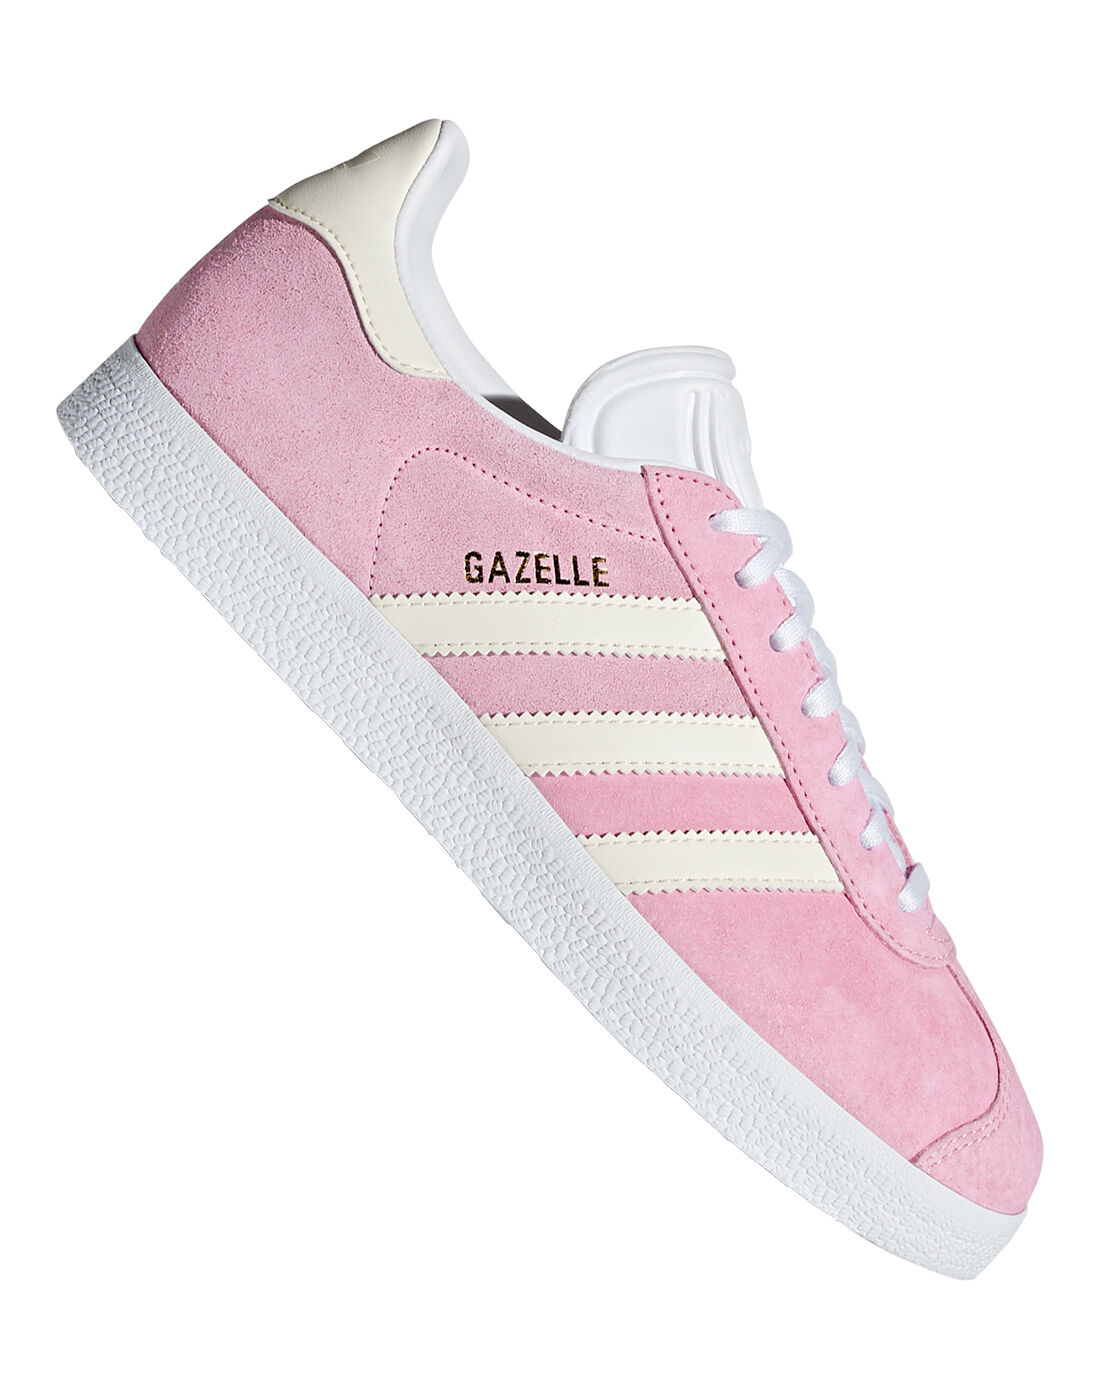 adidas gazelle pink womens